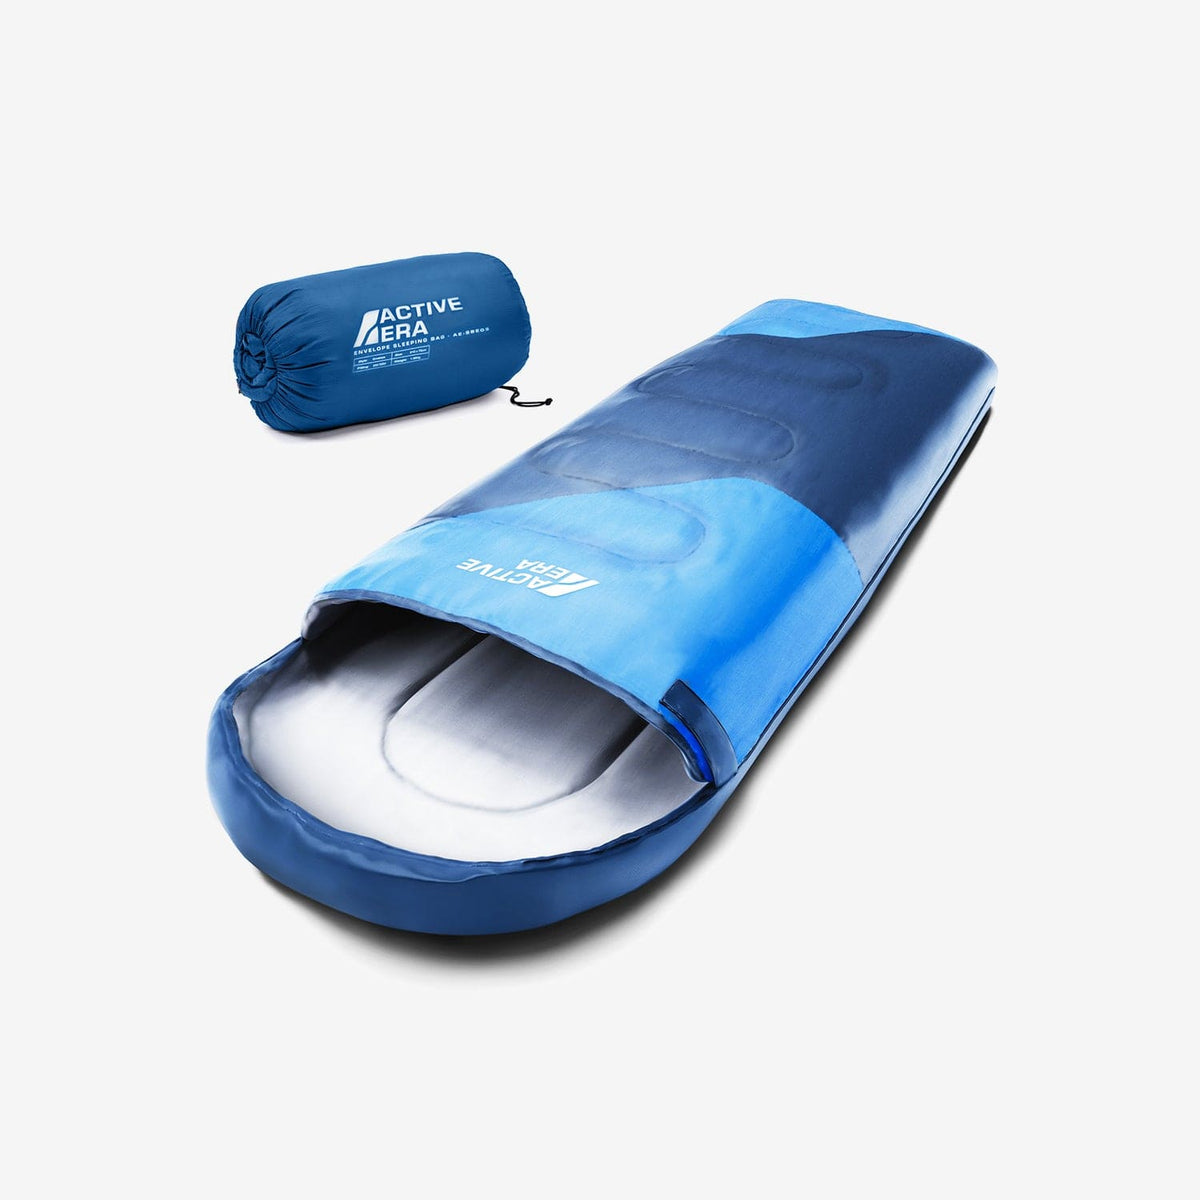 Saco de dormir ligero e impermeable de primera calidad - Azul, Entrega  gratuita